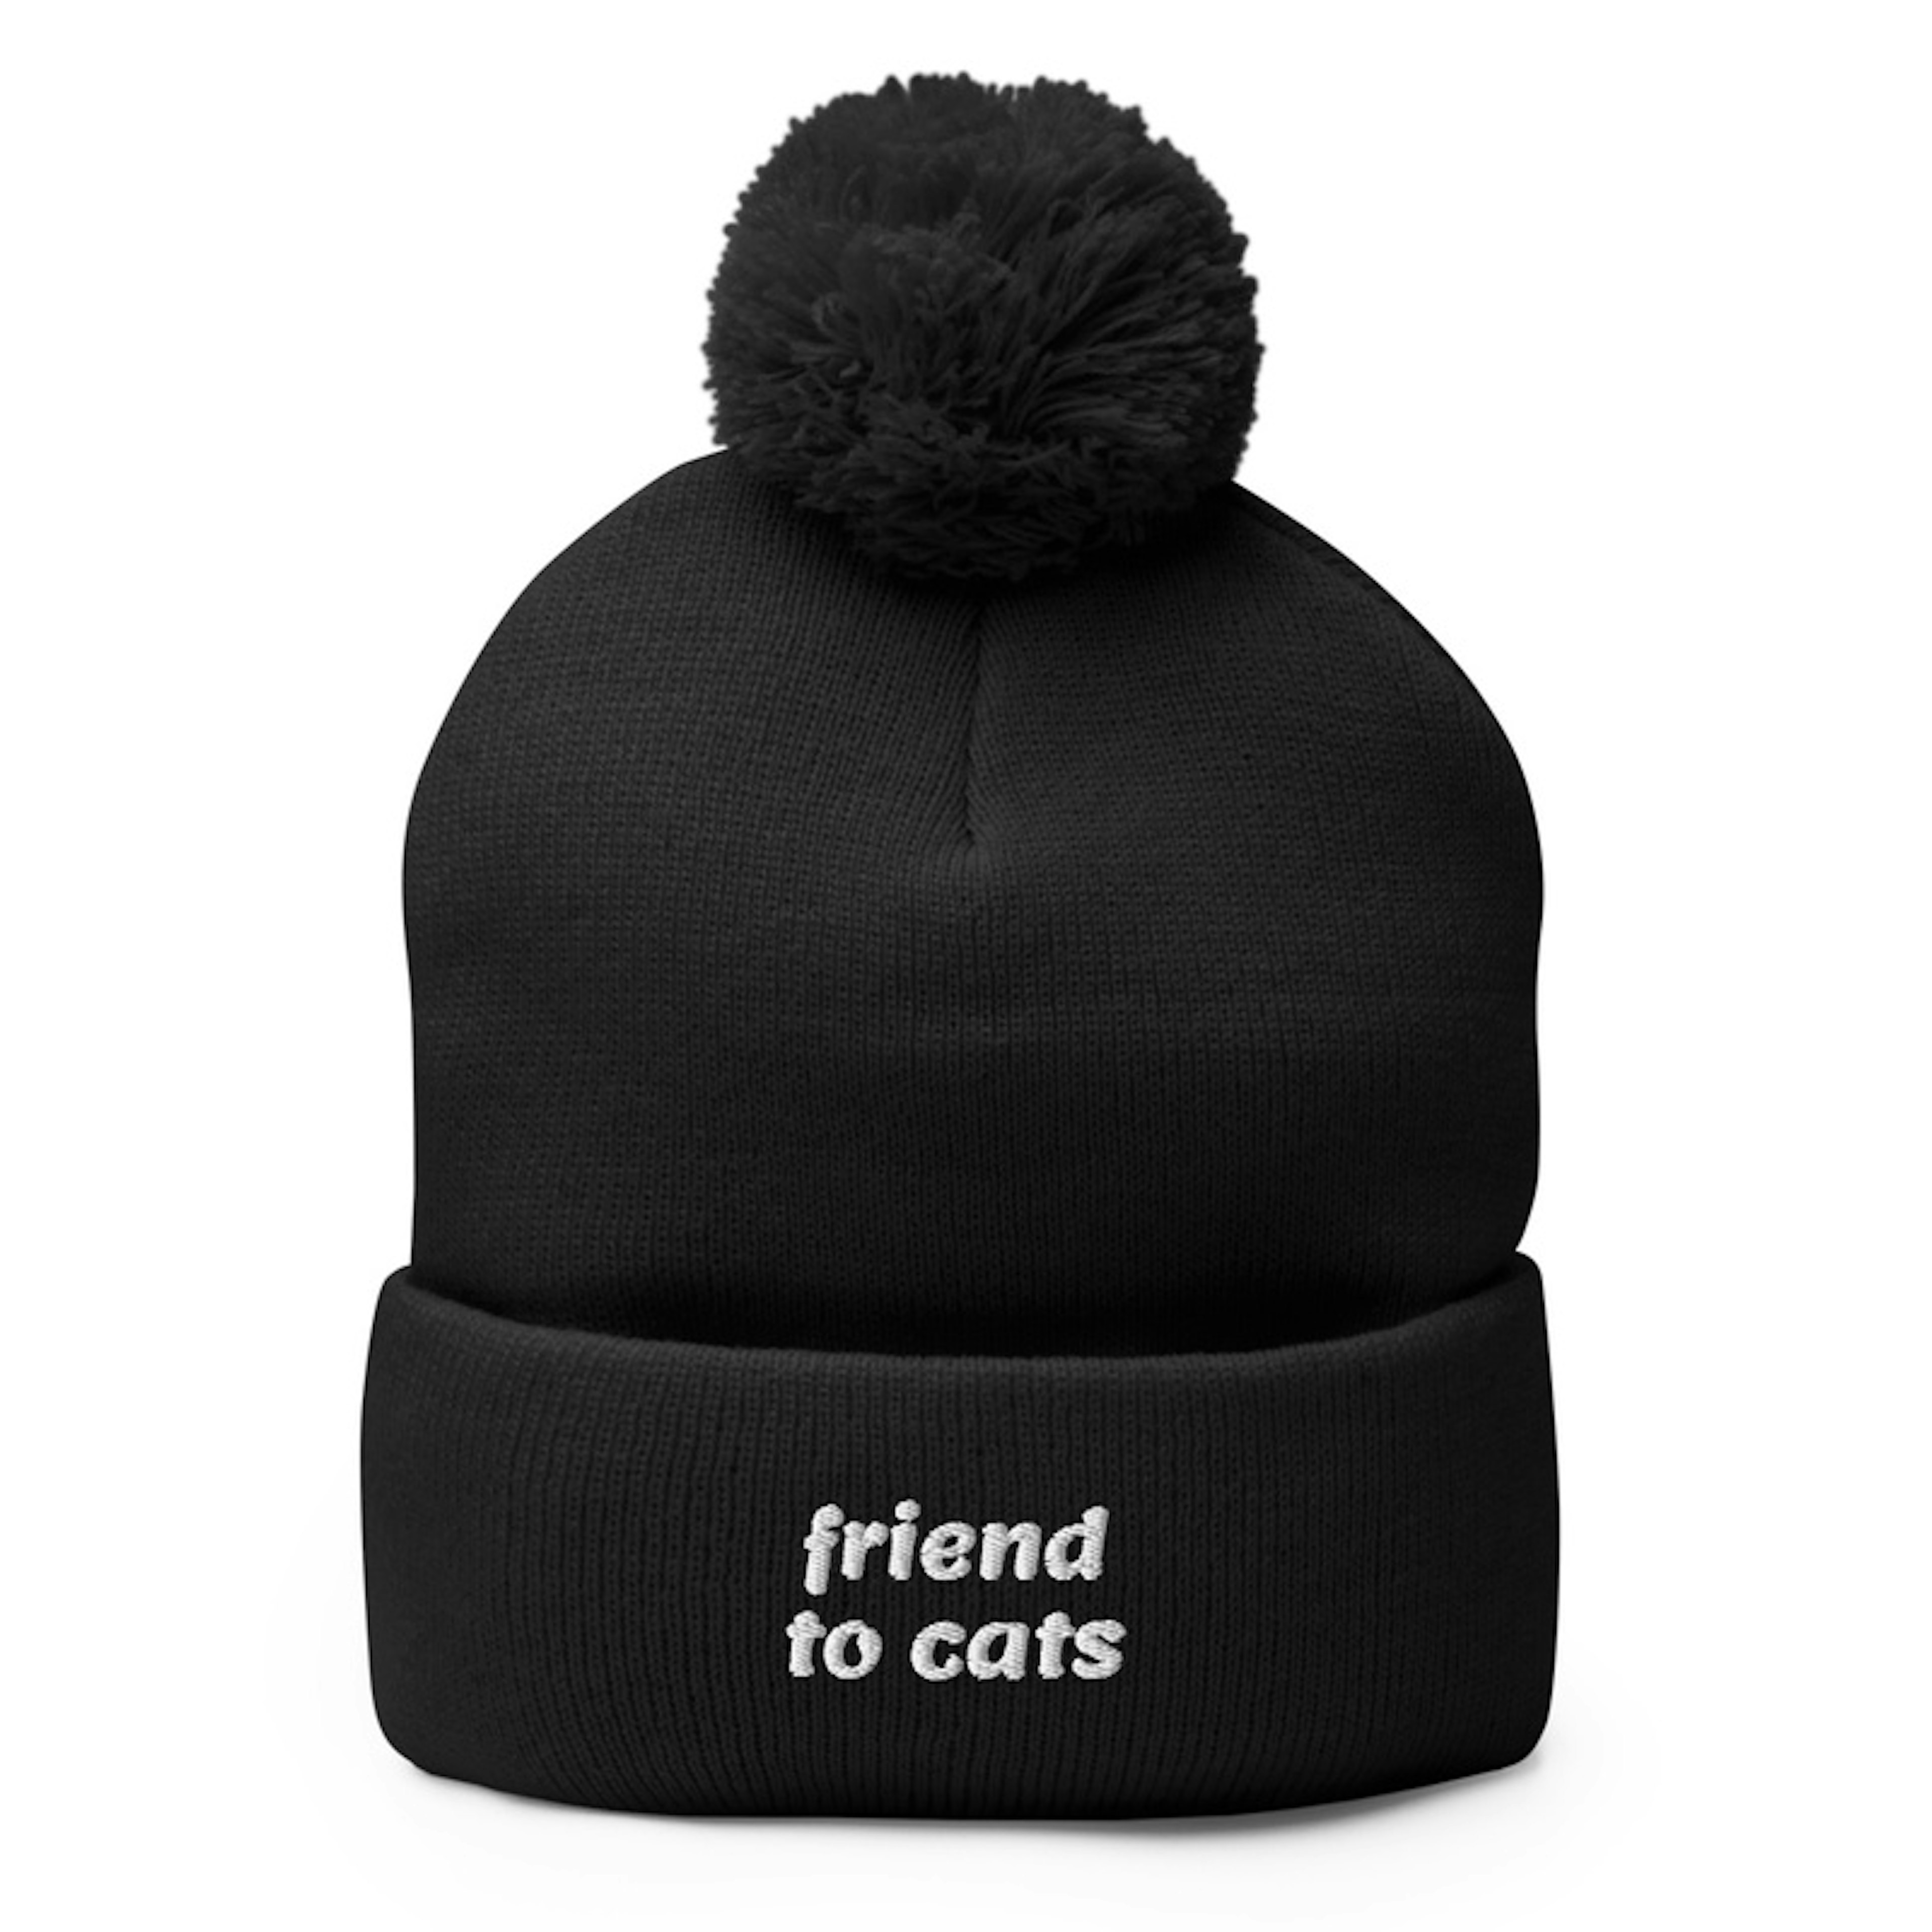 Friend to cats pompom hat